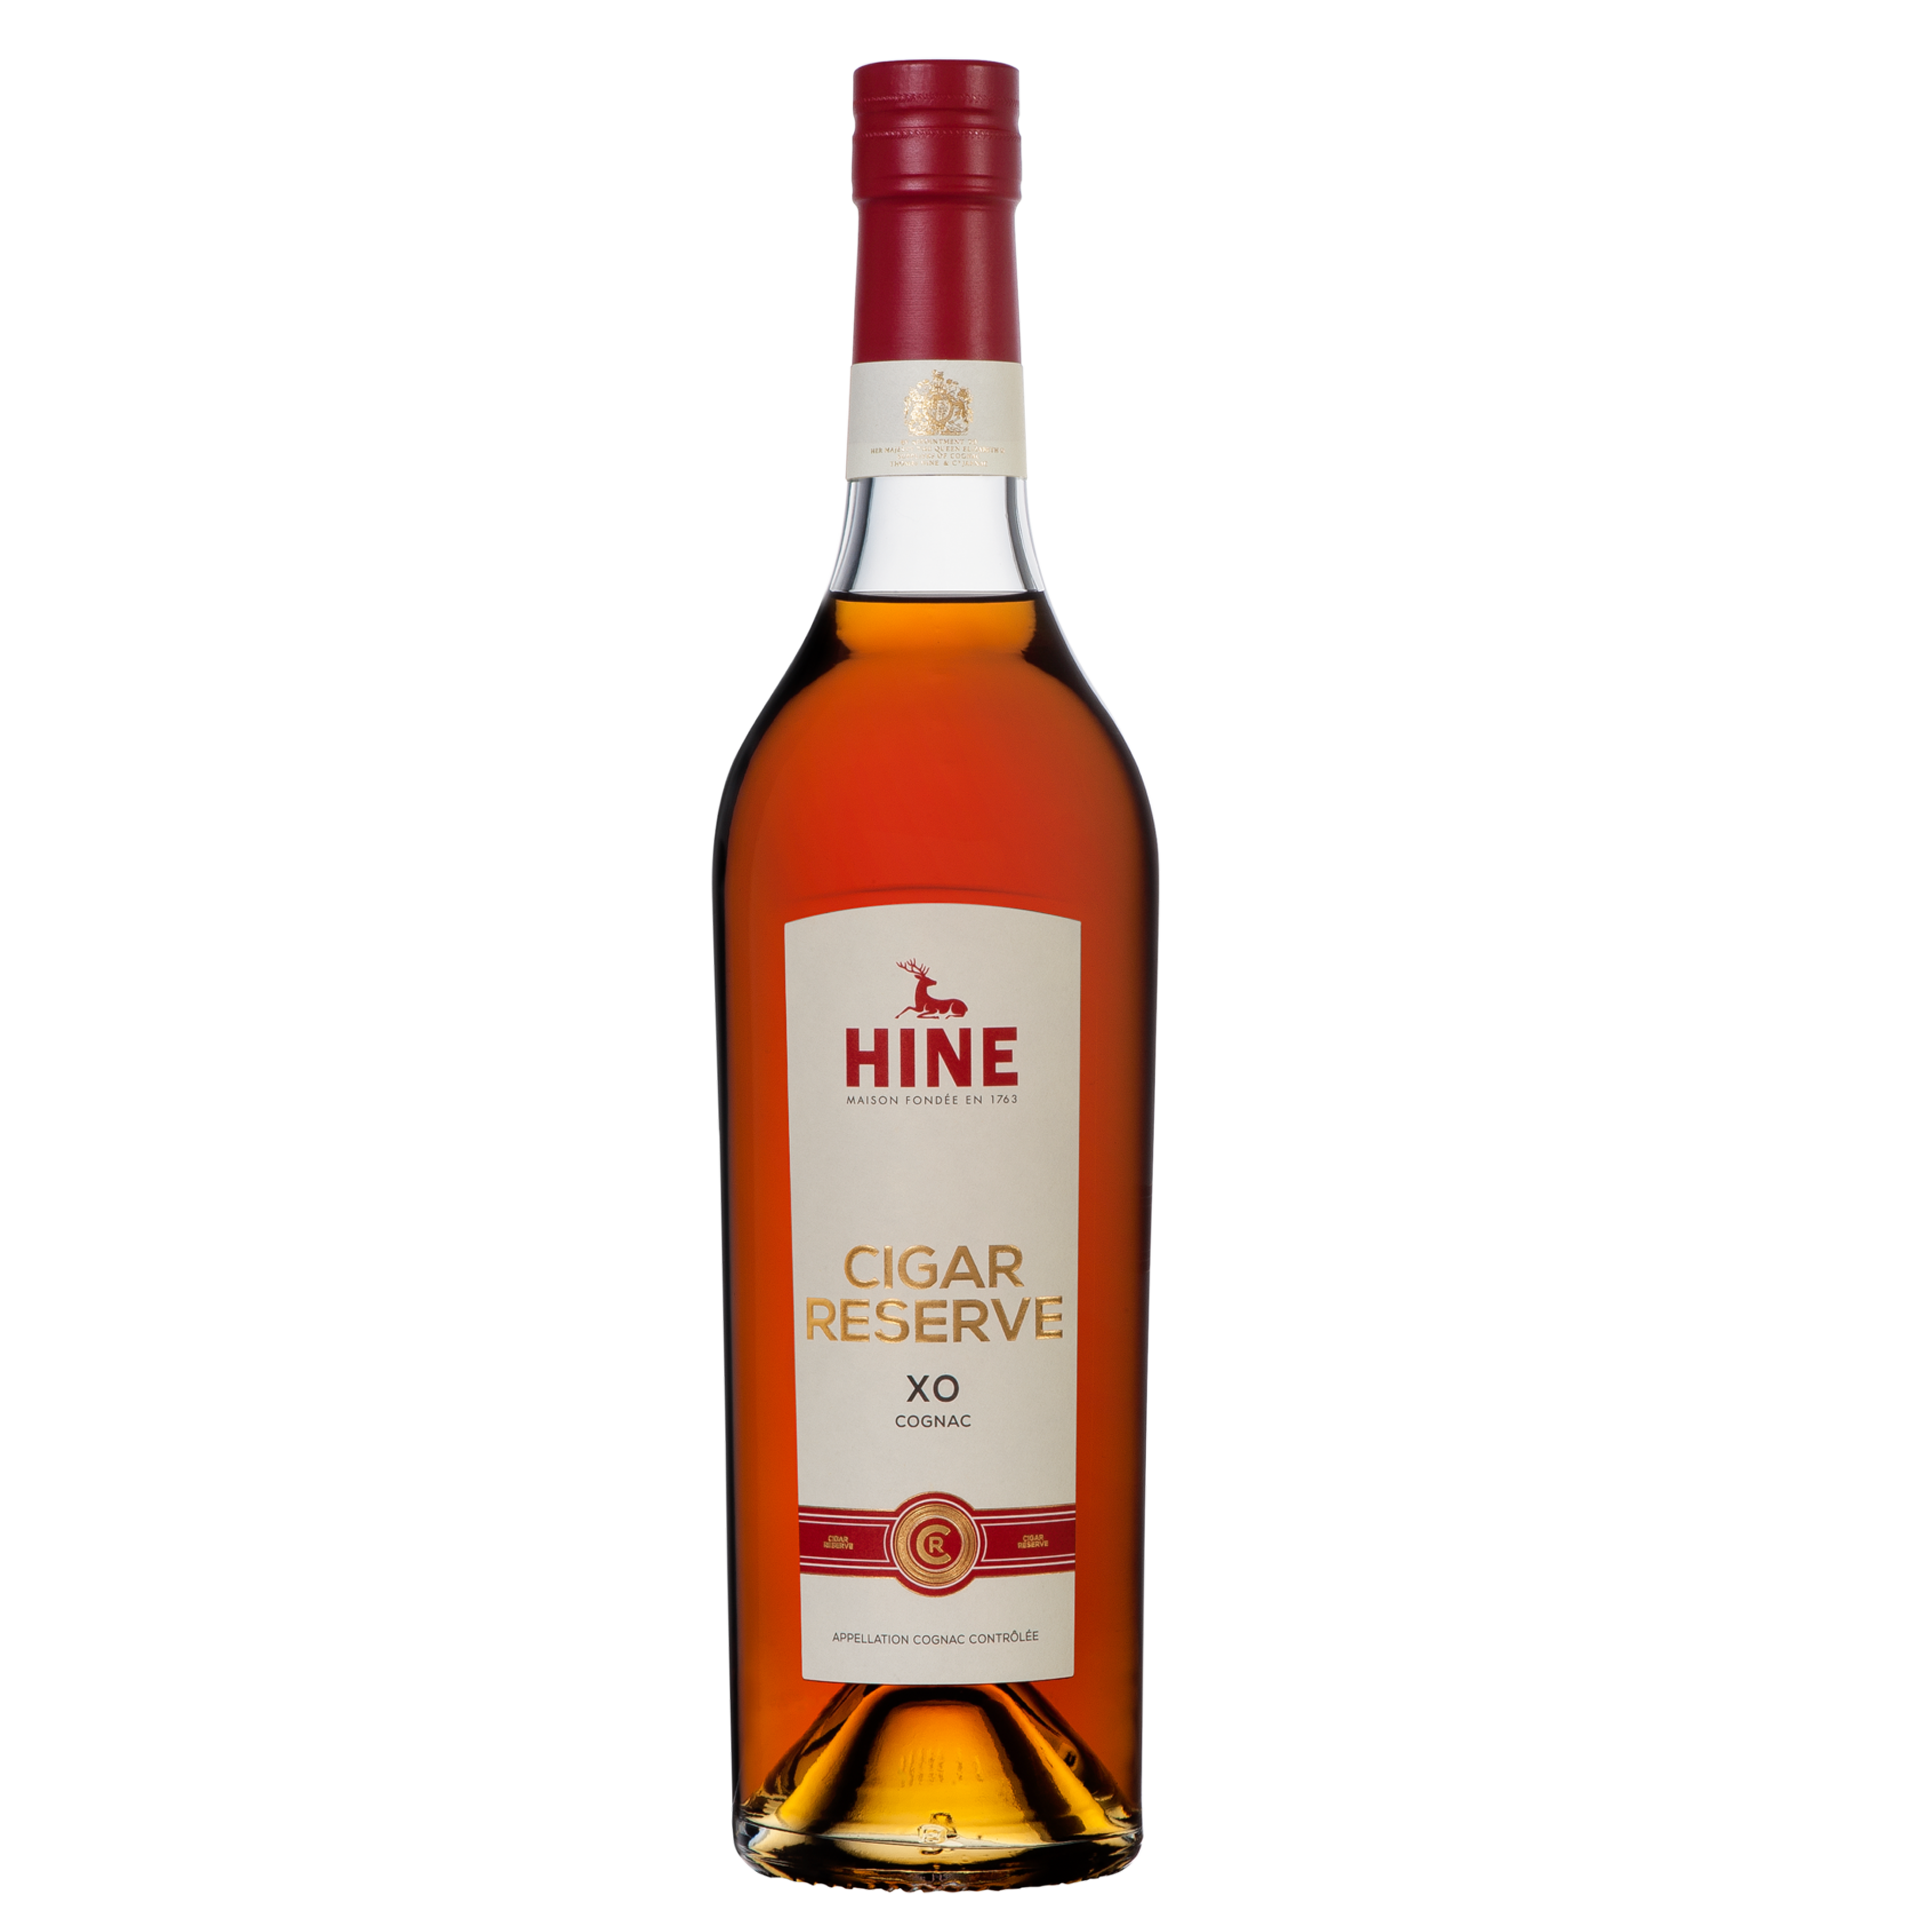 Hine Cigar Reserve Cognac XO